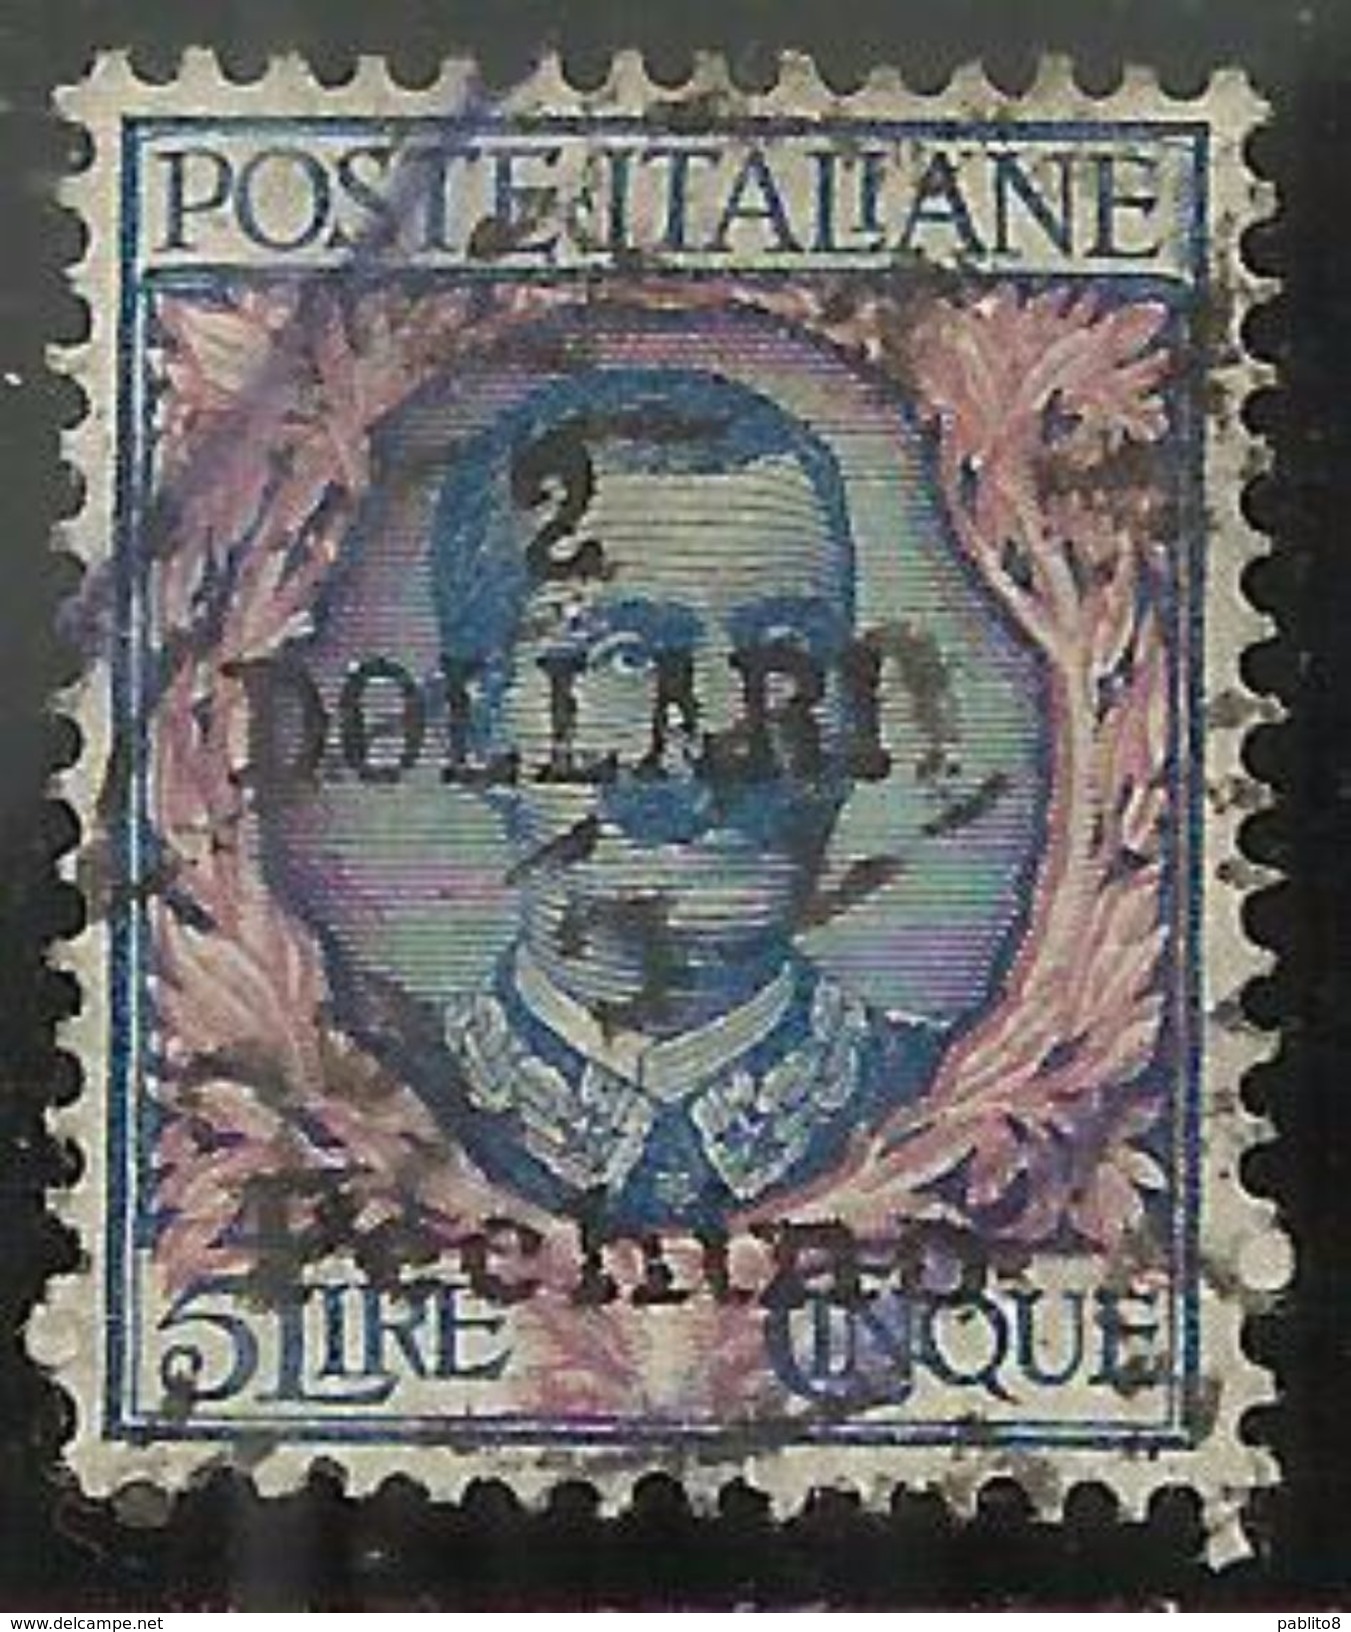 PECHINO BEIJING 1919 1920 SOPRASTAMPATO D'ITALIA ITALY OVERPRINTED 2 DOLLARI DOLLARS SU LIRE 5 USATO USED CERTIFICATO - Pekin